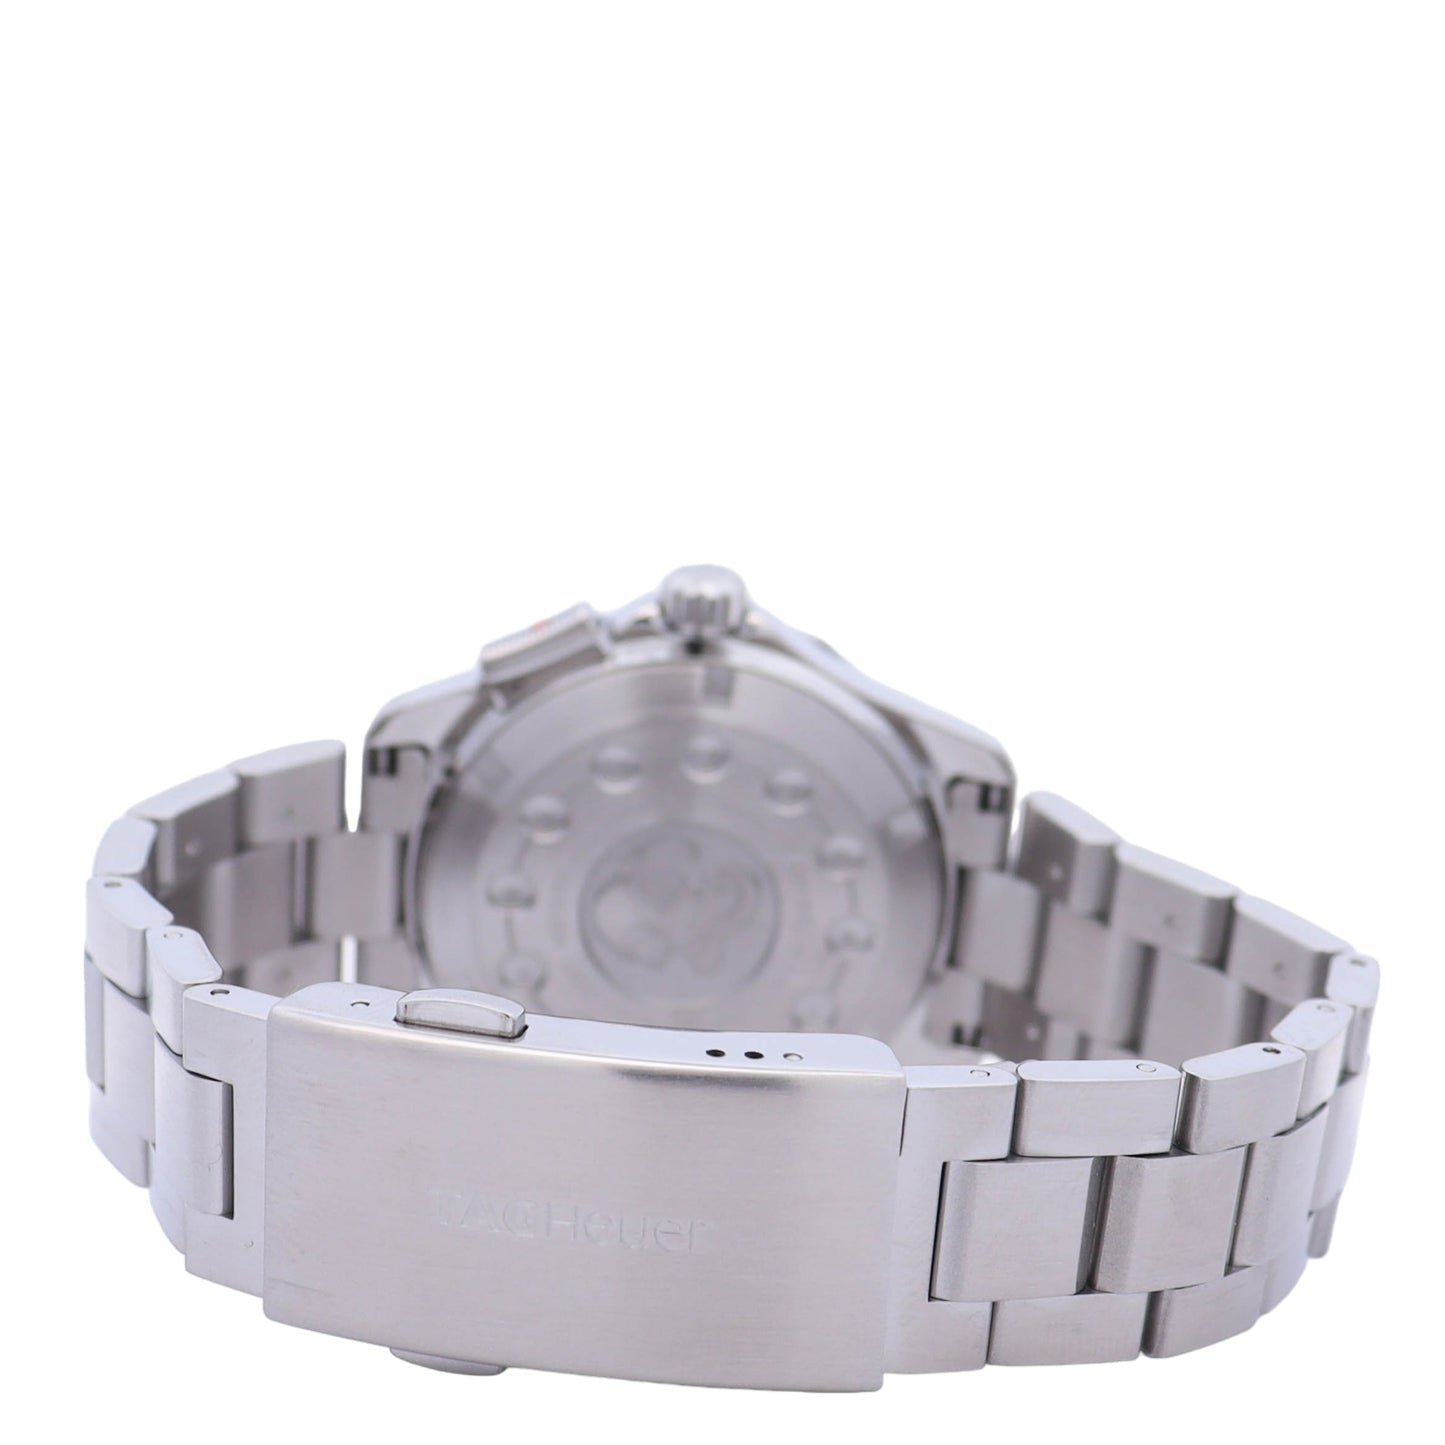 Tag Heuer Aquaracer 40mm Stainless Steel White Dial Watch Reference# WAP111Y.BA0831 - Happy Jewelers Fine Jewelry Lifetime Warranty